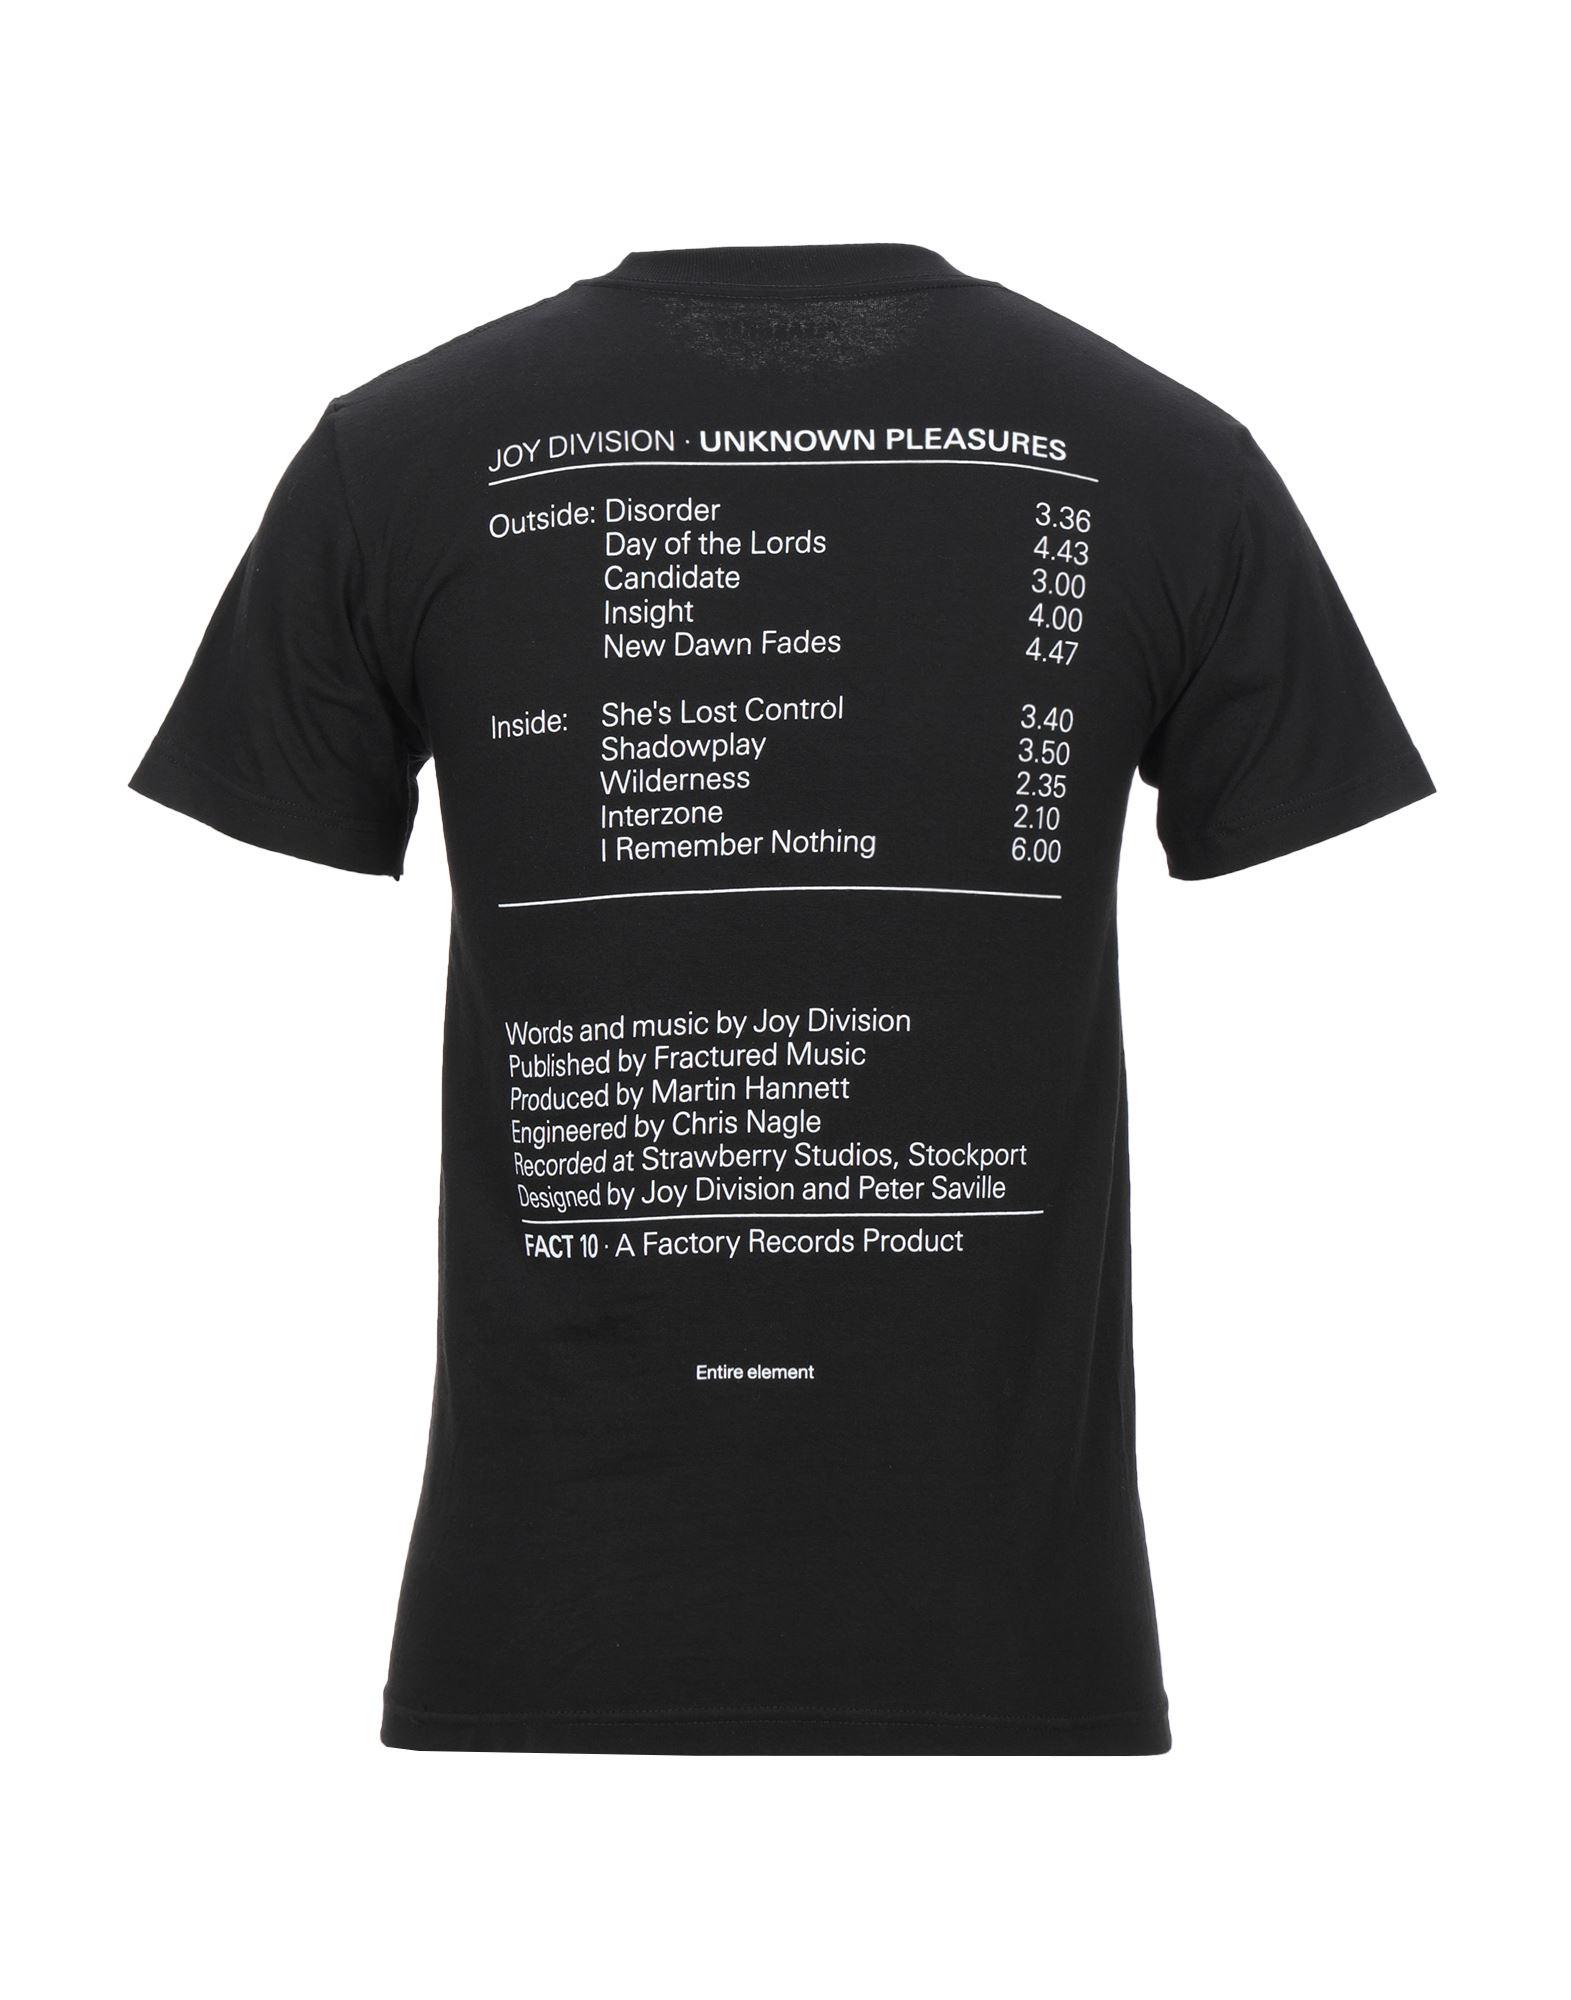 Pleasures Cotton T-shirt in Black for Men - Lyst